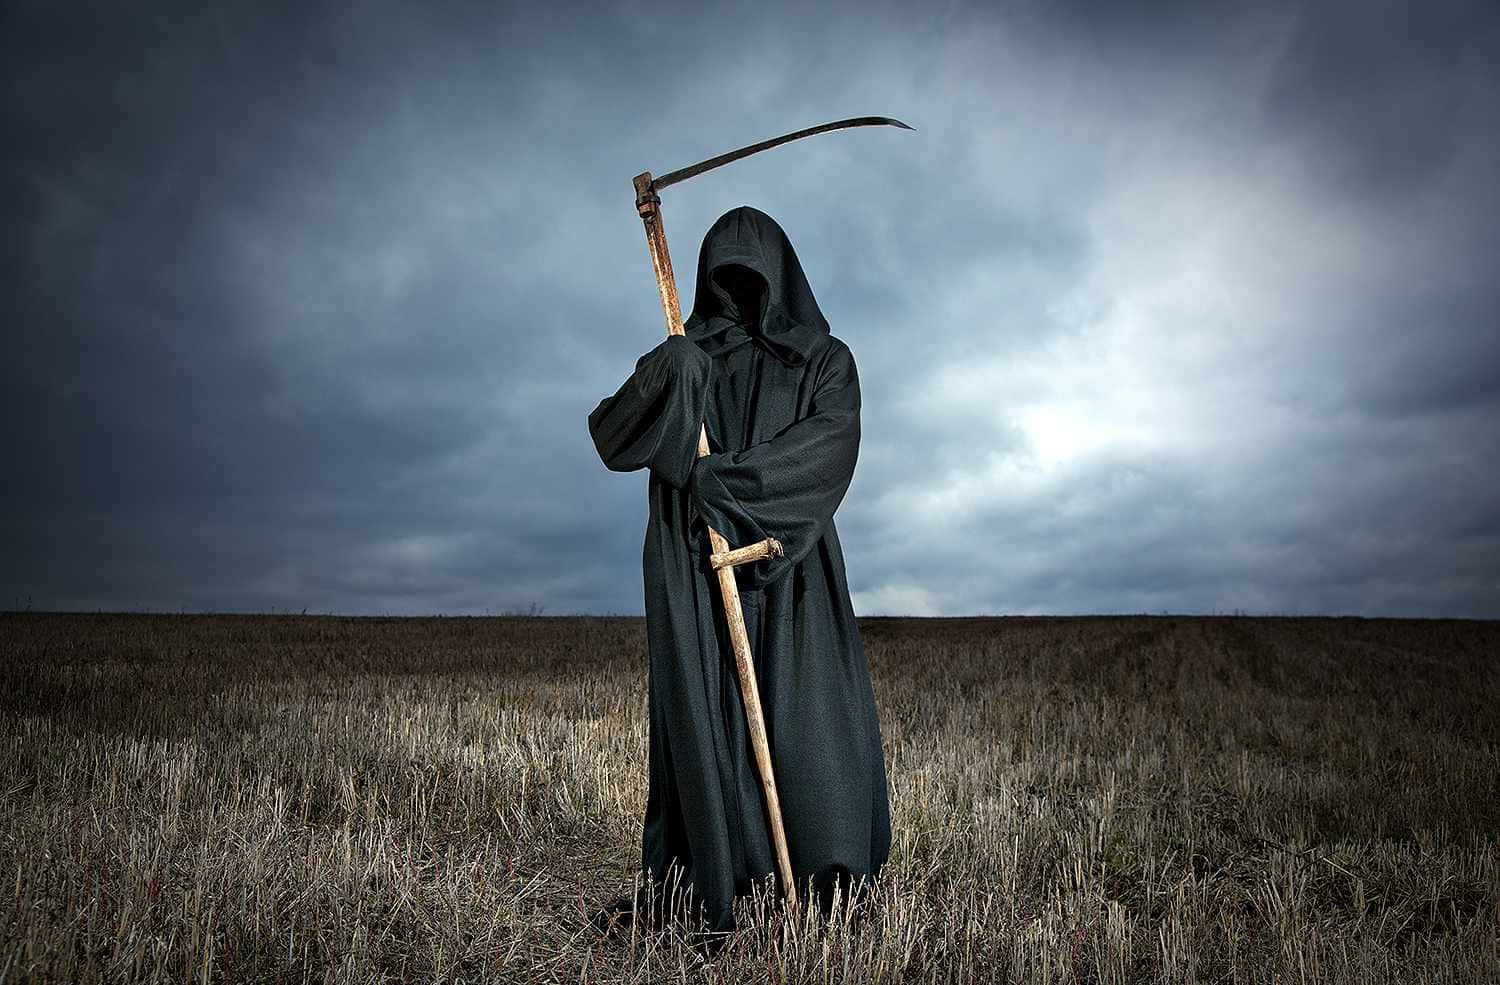 Caption: Eerie Grim Reaper at Sunset